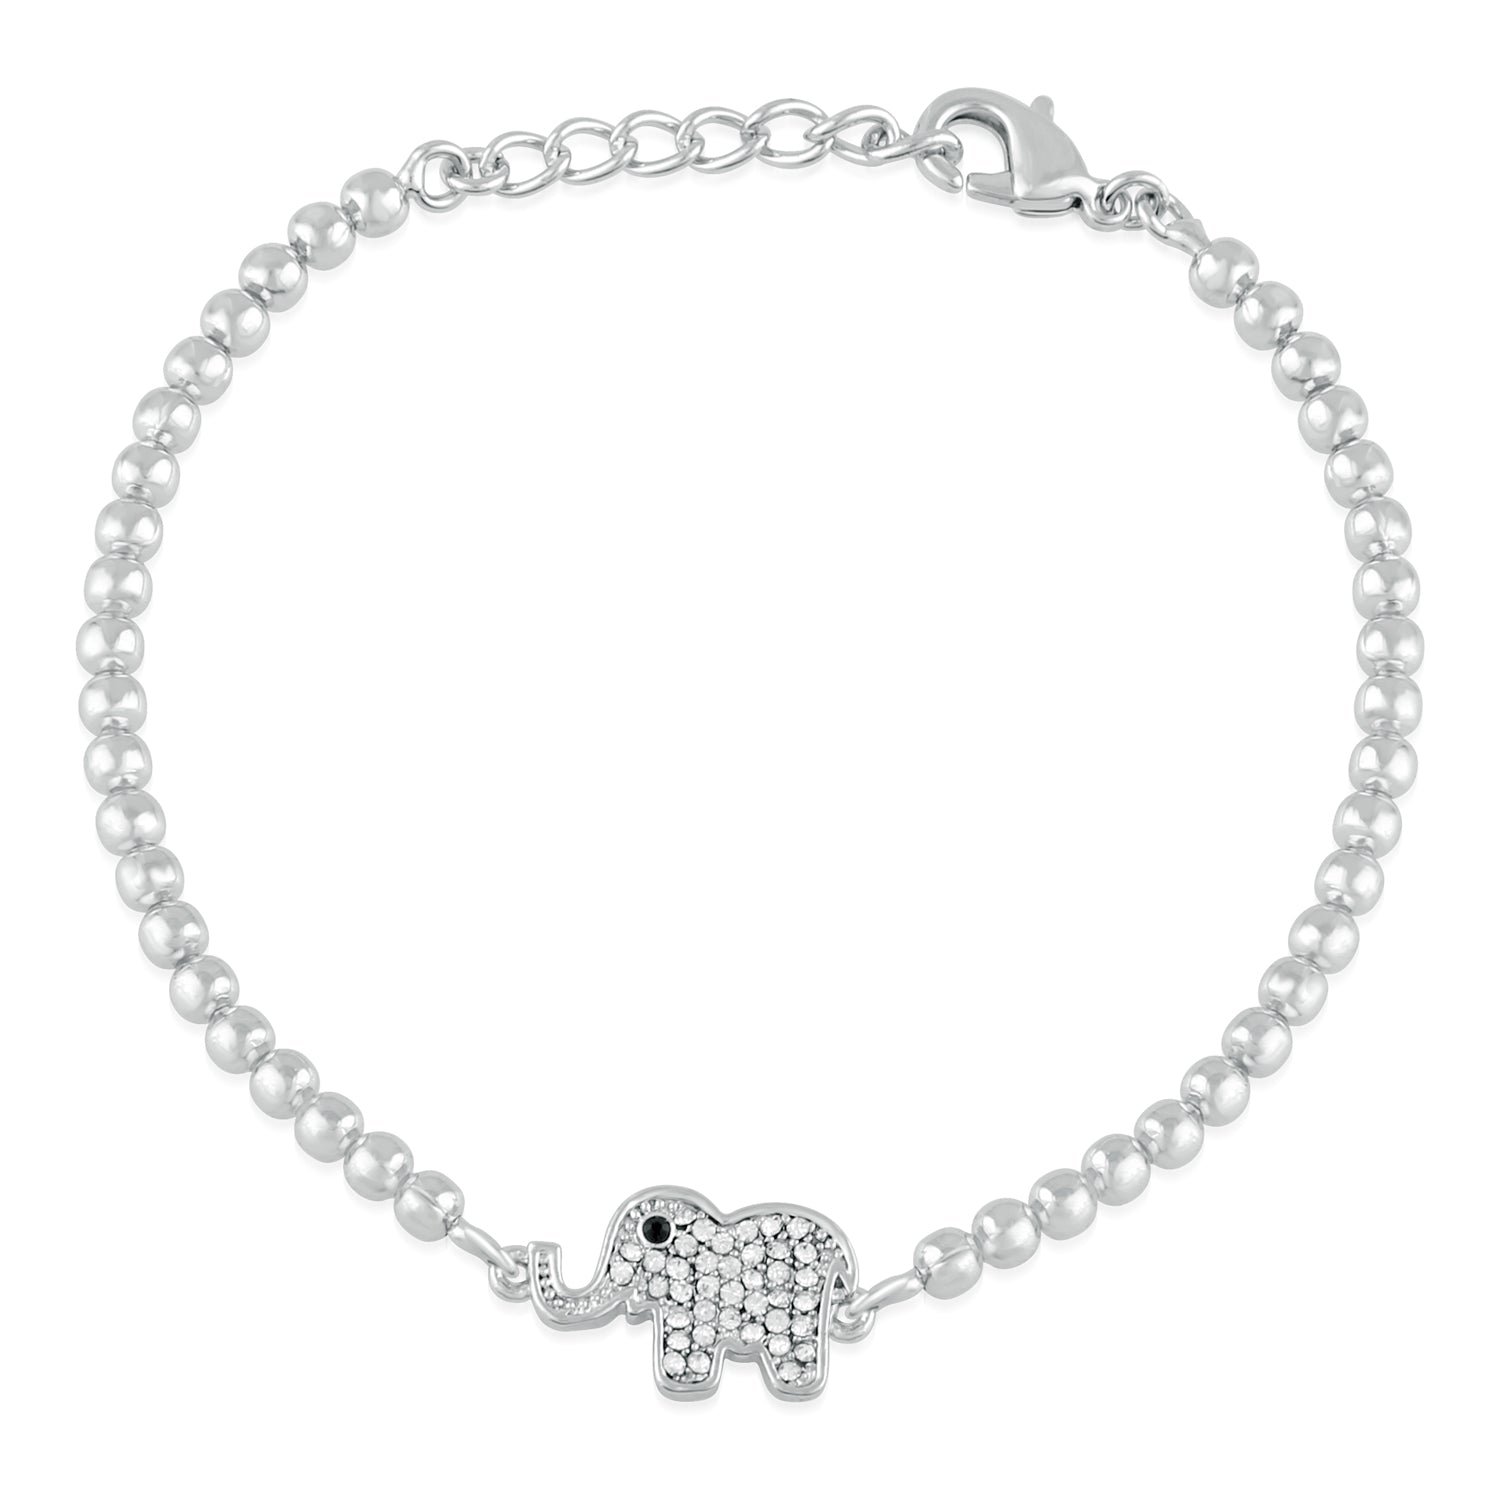 Majestic Elephant Crystal Bracelet